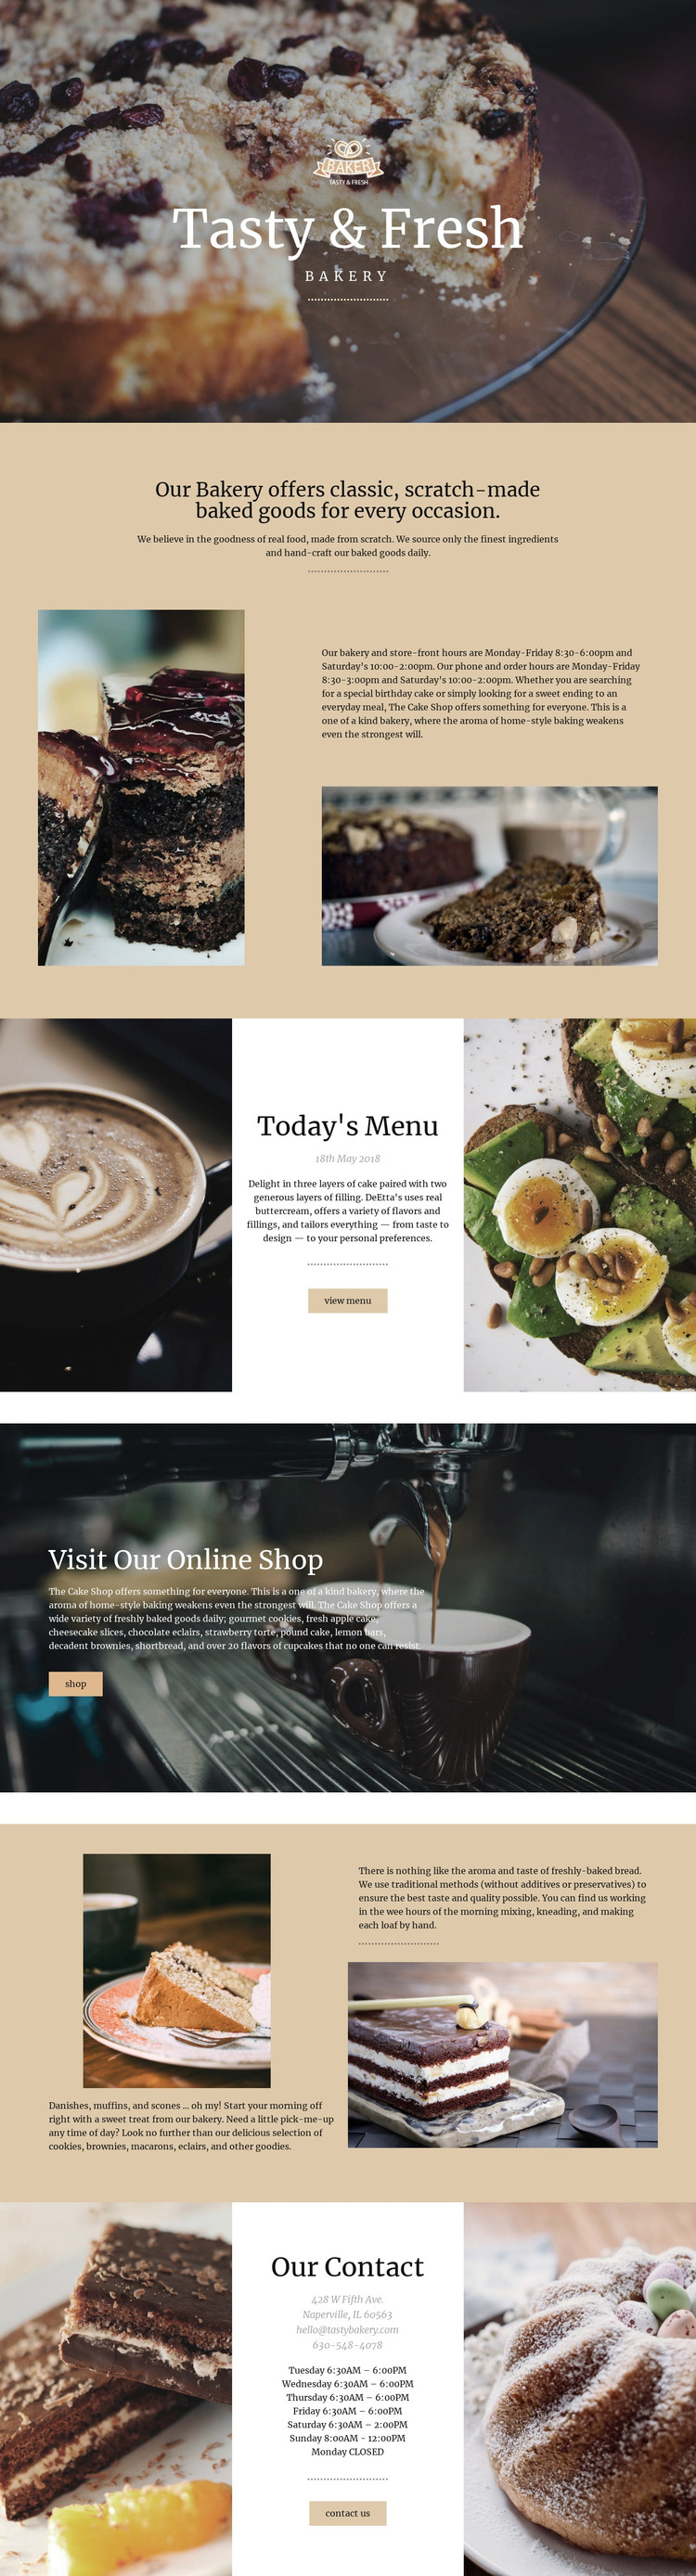 Tasty and fresh food Web Design